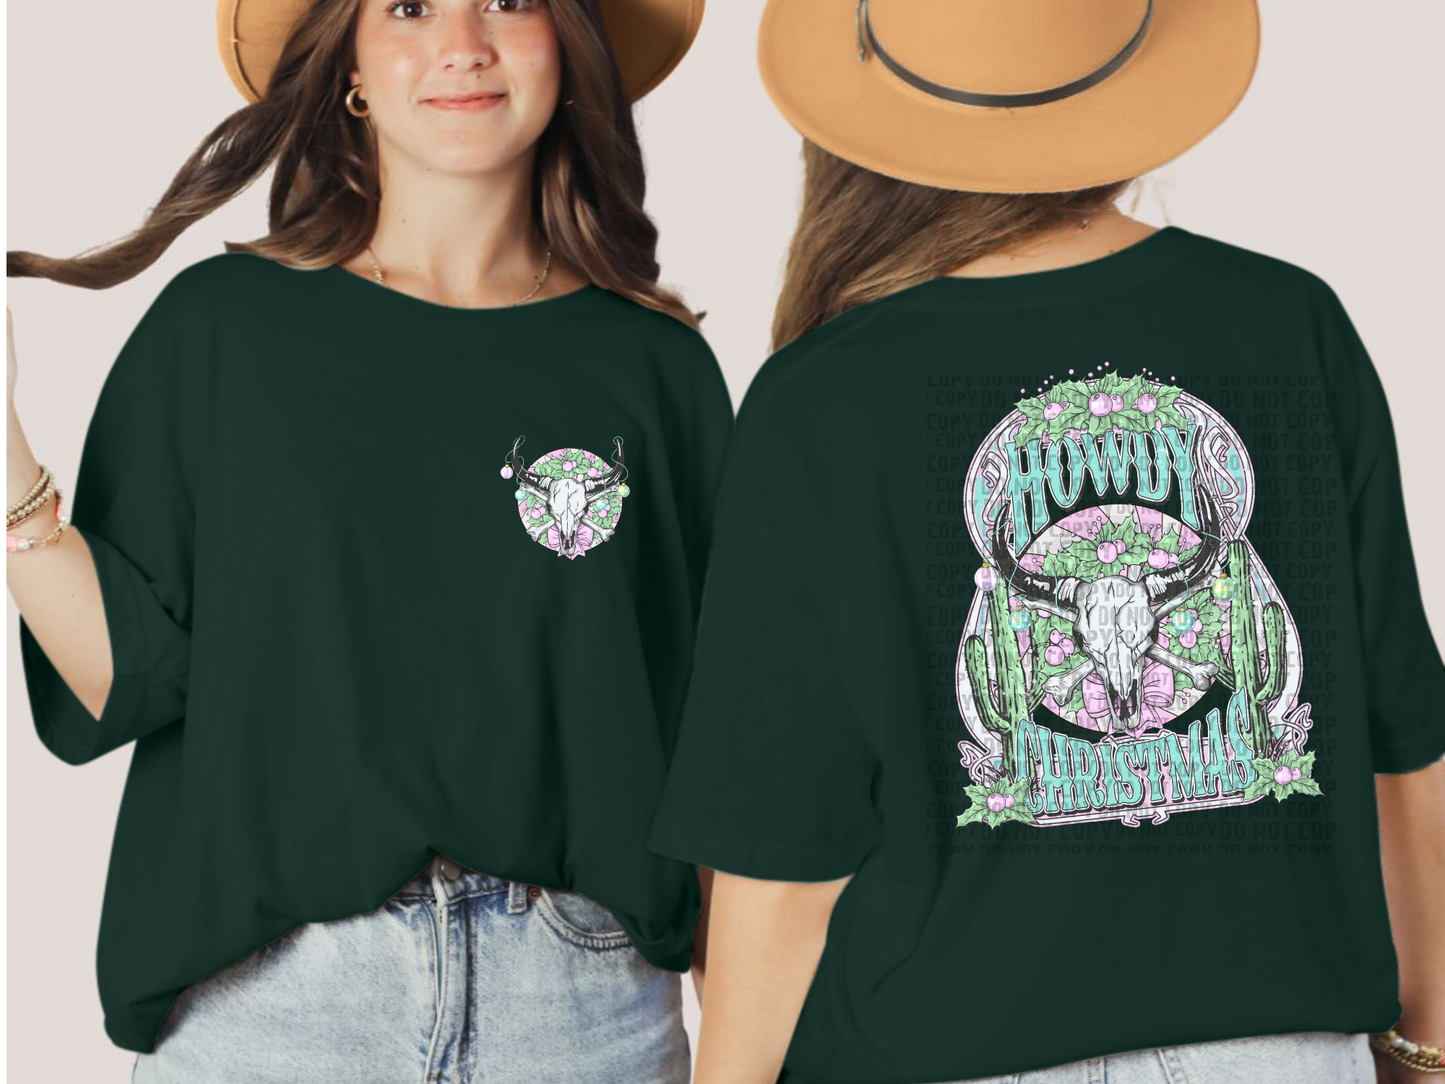 Howdy Christmas T-Shirt | Western Christmas Shirt | Fast Shipping | Super Soft Shirts for Women/Kid's